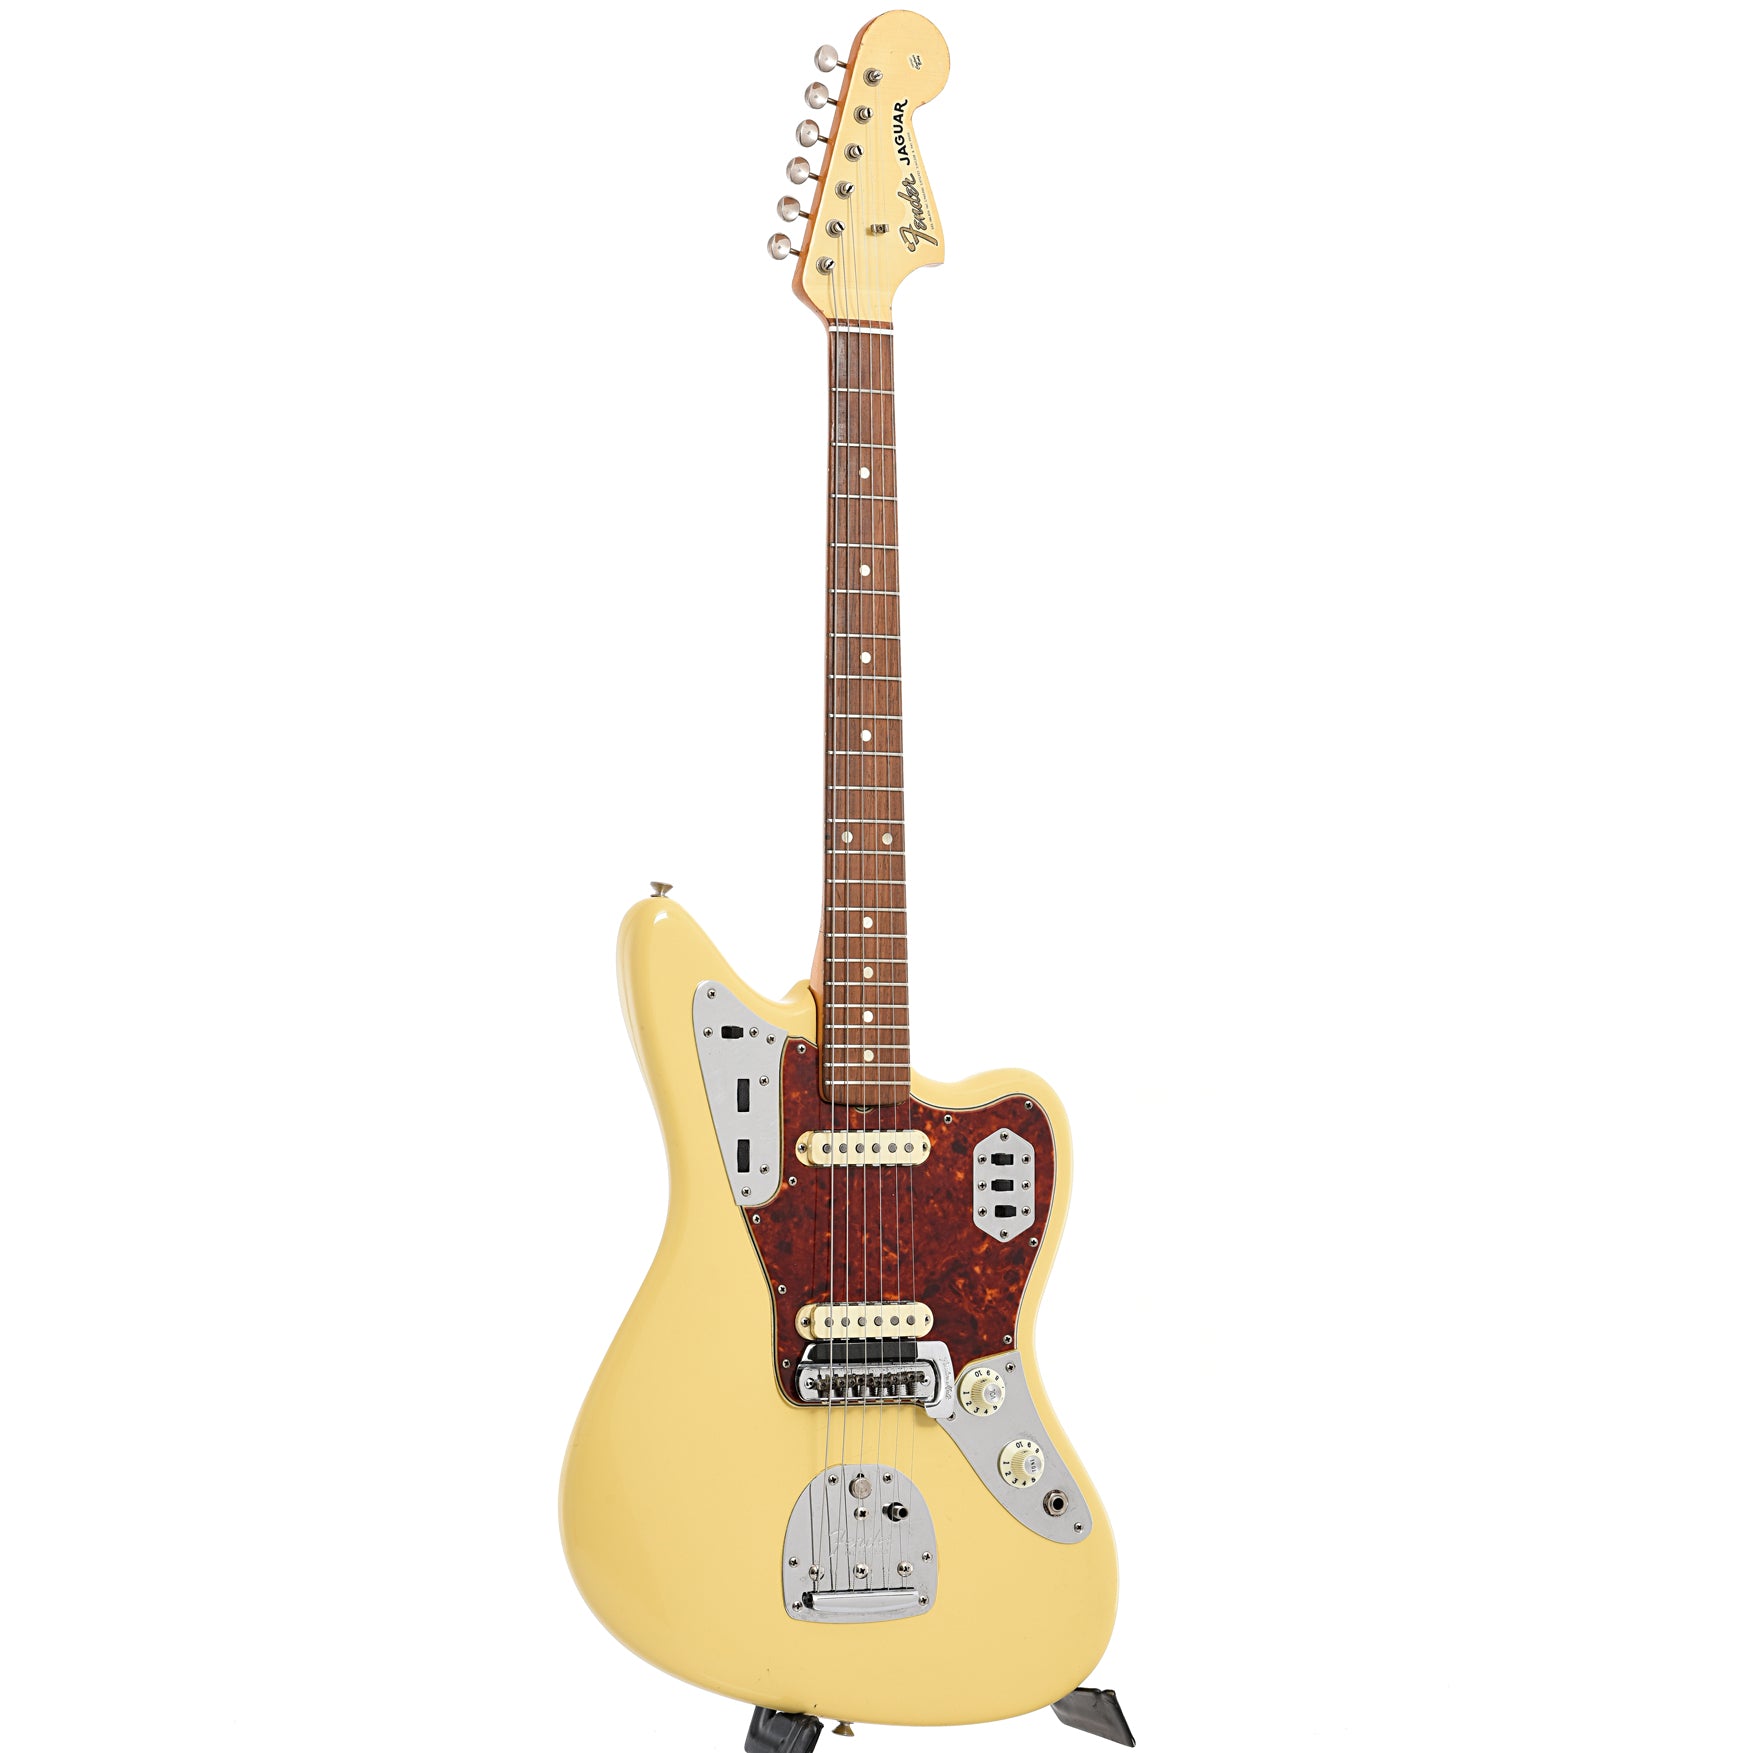 Full front and side of Fender Jaguar Electric Guitar (1965)